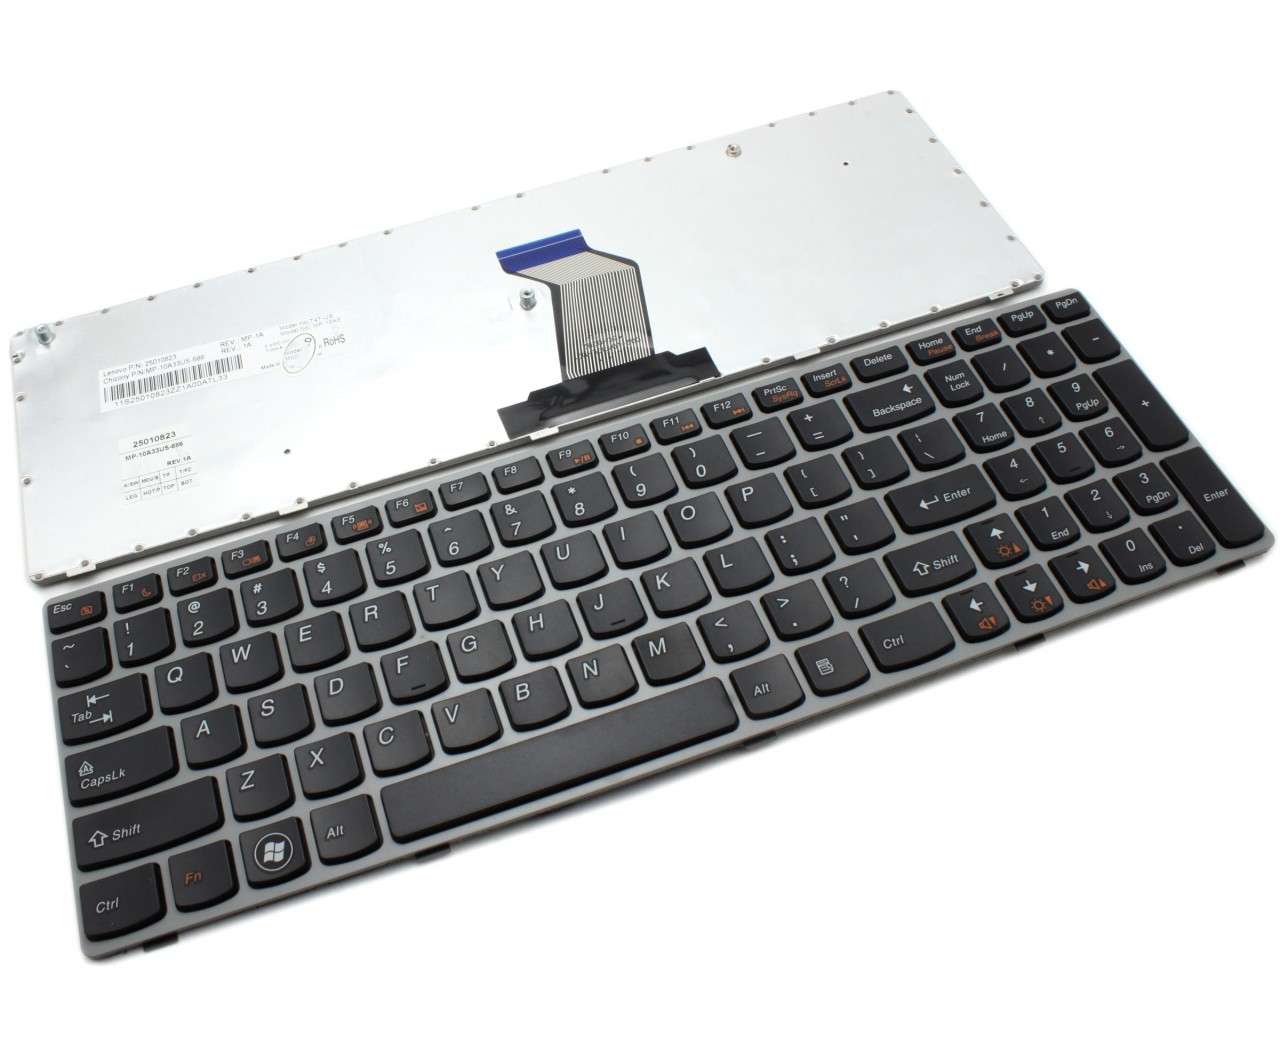 Tastatura Lenovo IdeaPad G570AH Neagra cu Rama Gri Originala